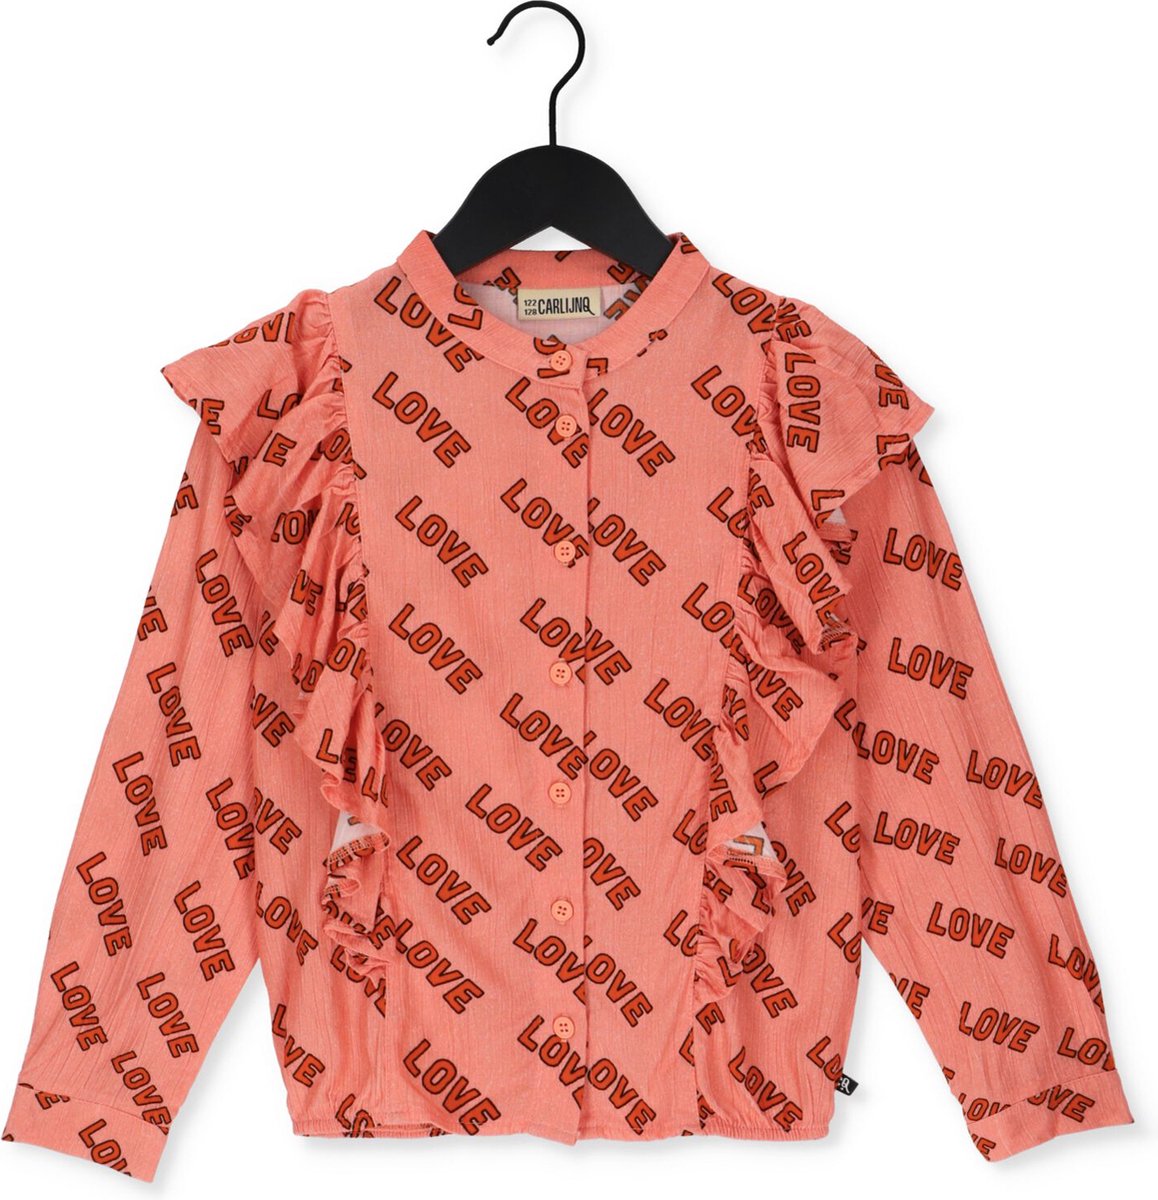 Carlijnq Love - Blouse Ruffled Longsleeve Tops & T-shirts Meisjes - Shirt - Lichtroze - Maat 98/104